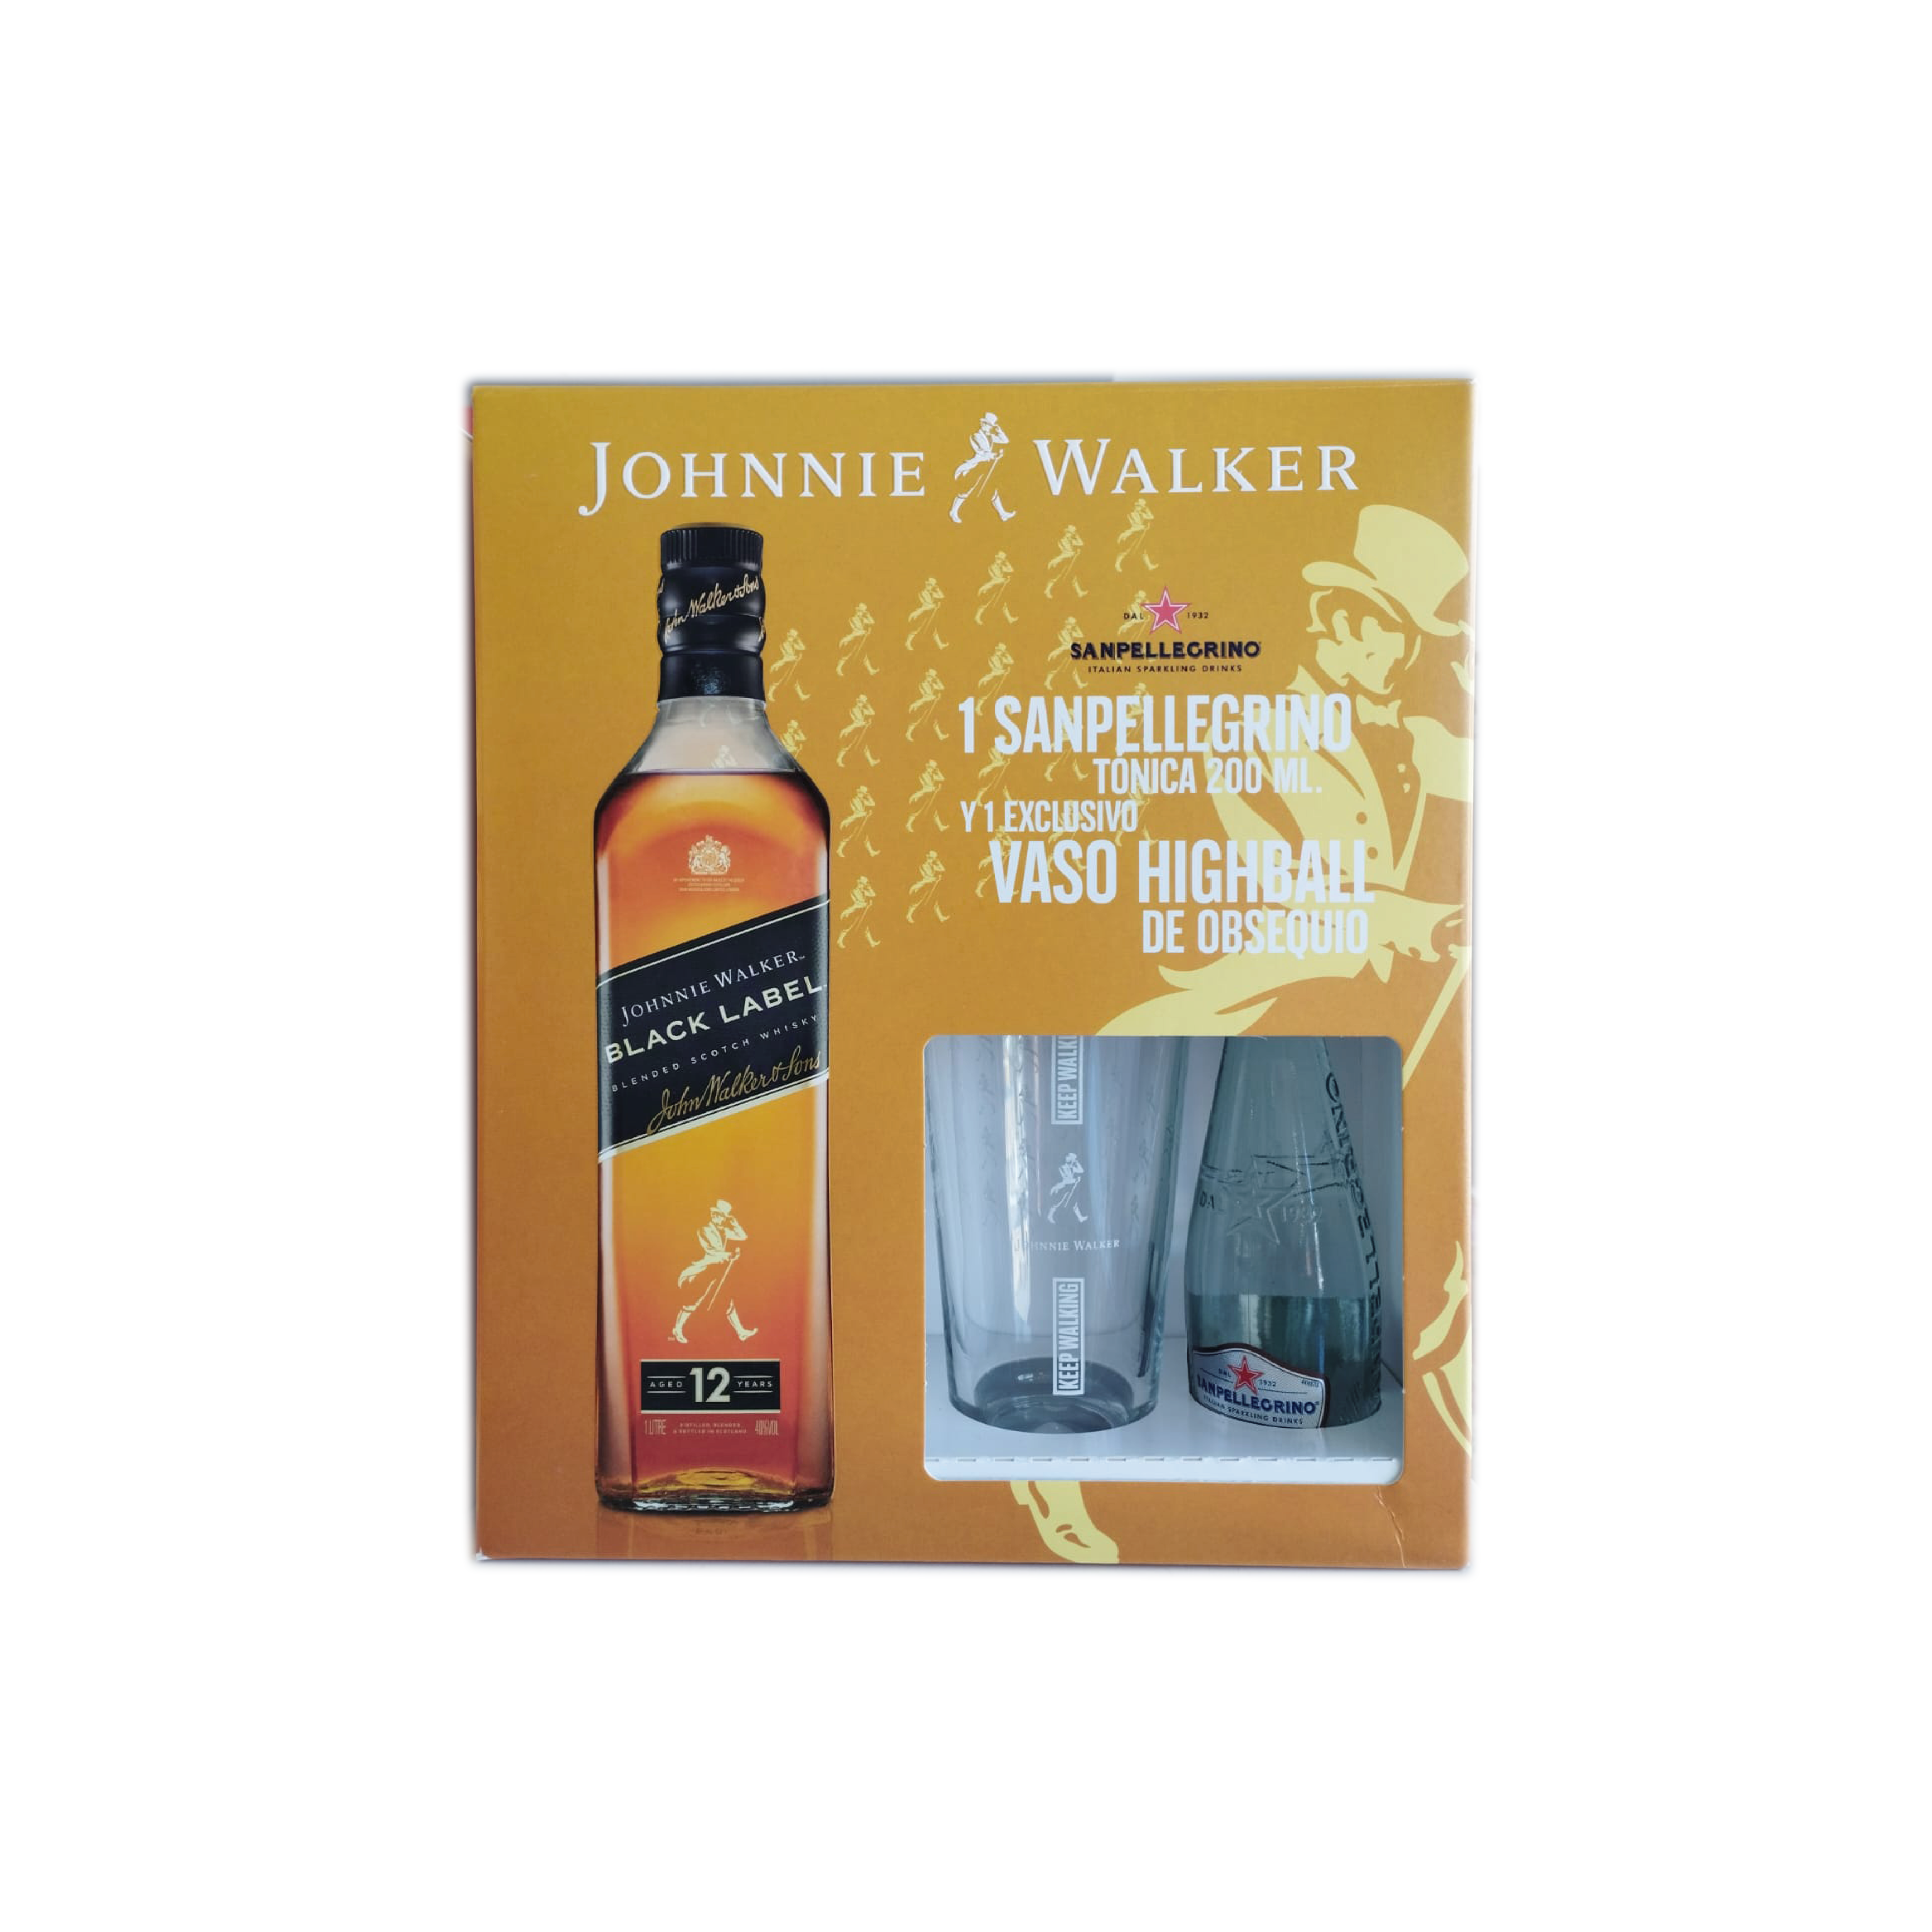 Johnnie Walker Black Label 1L + 1 Tónica 200ml + 1 vaso